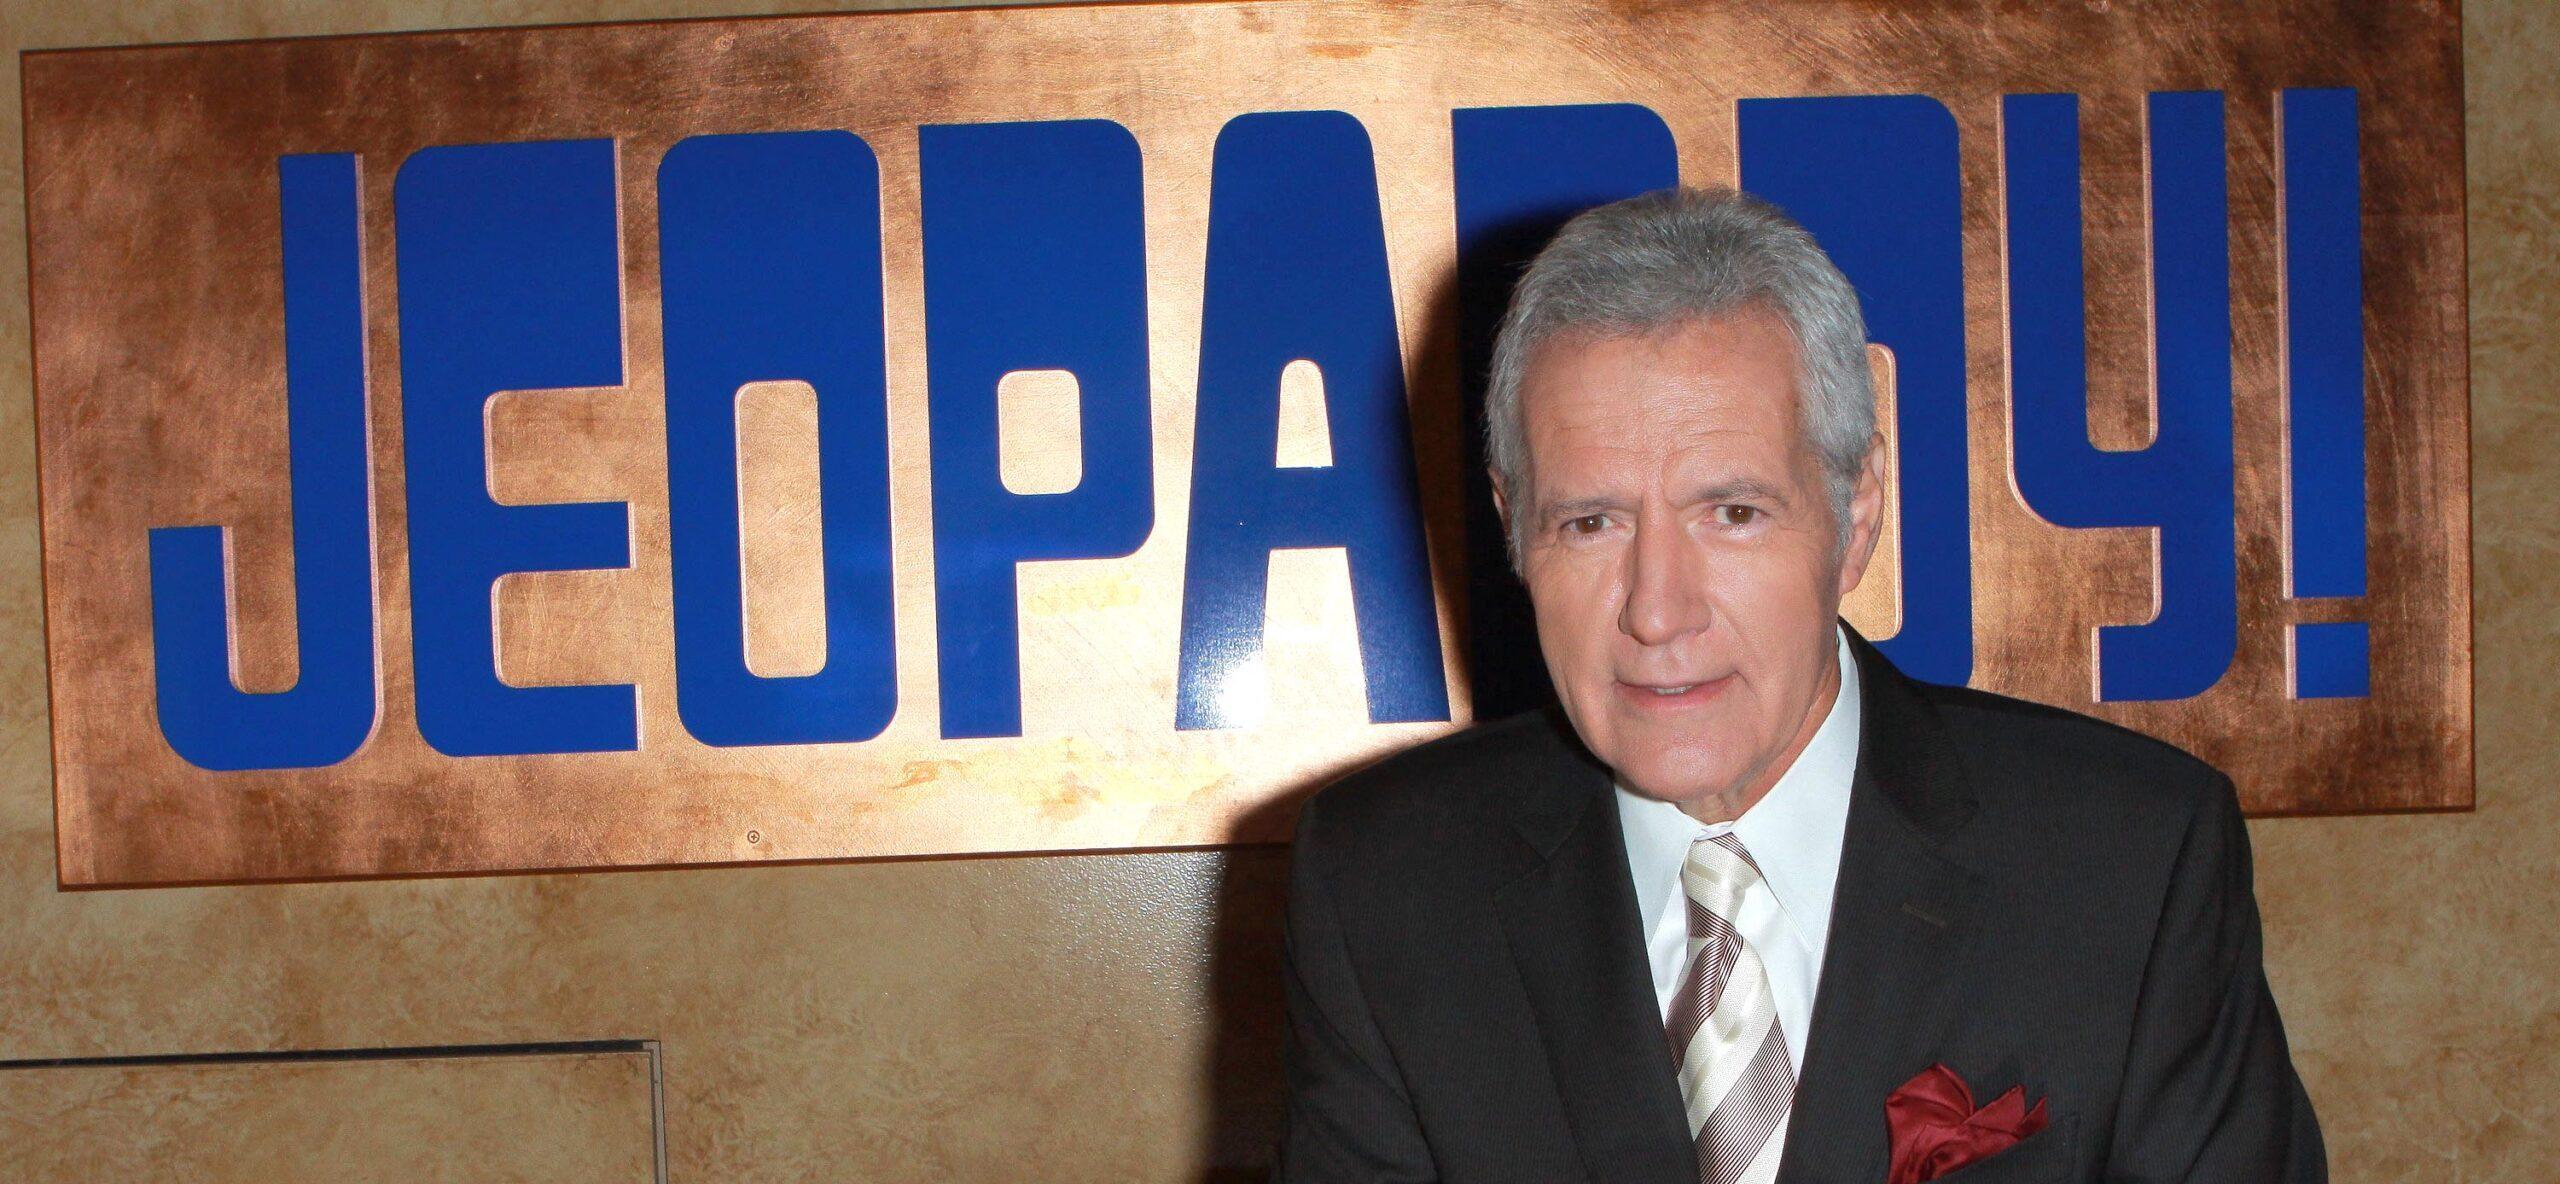 Late ‘Jeopardy!’ Host Alex Trebek’s Former Home To Be Demolished